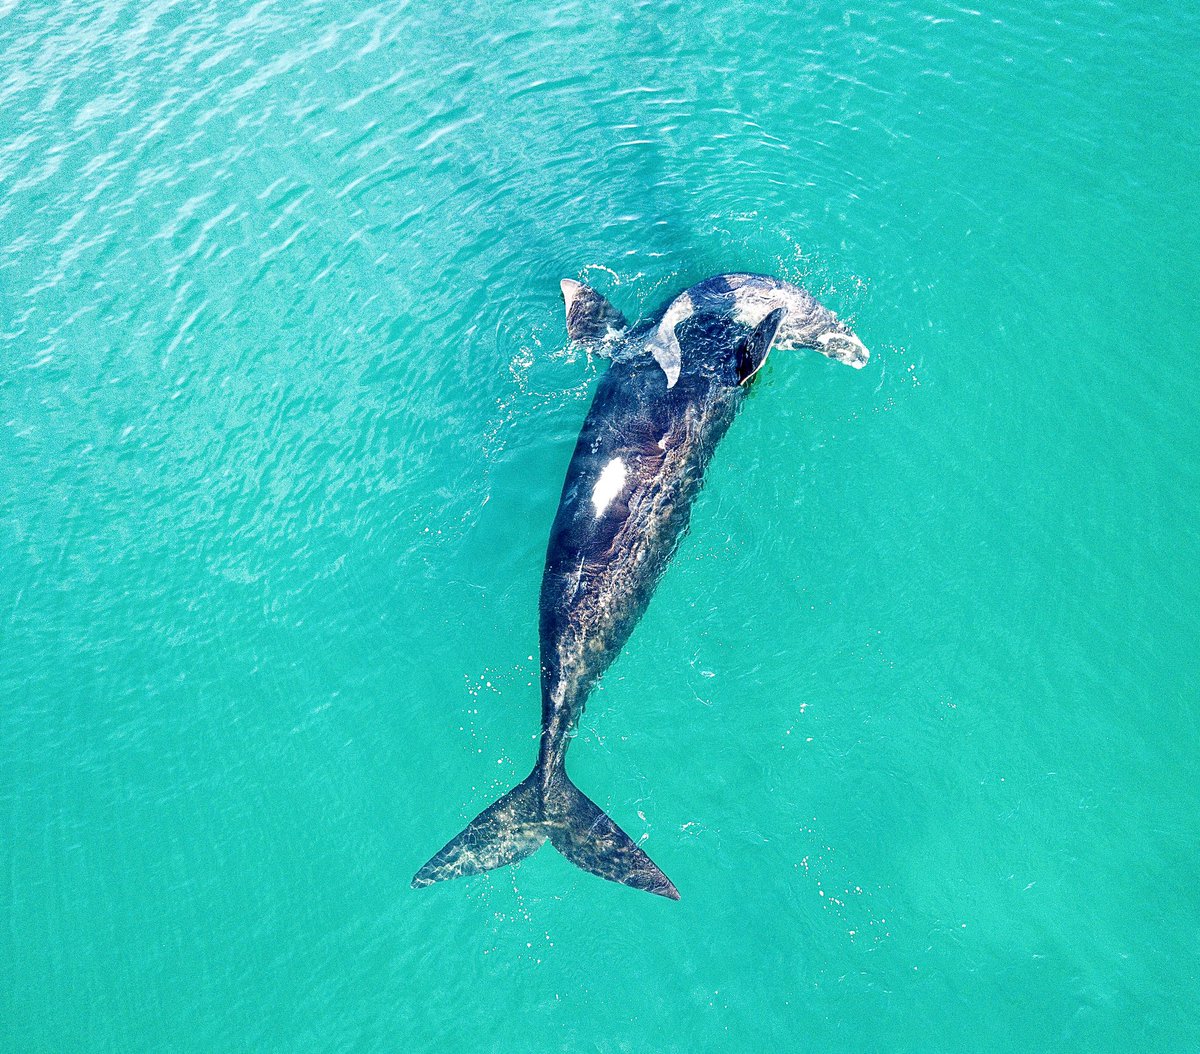 Ballenas francas en el Golfo Nuevo 🐳 #patagonia #Chubut #madryn #argentina #golfonuevo #ballena #ballenafrancaaustral #whale #southernrightwhale #wildlife #nature #drone #dji